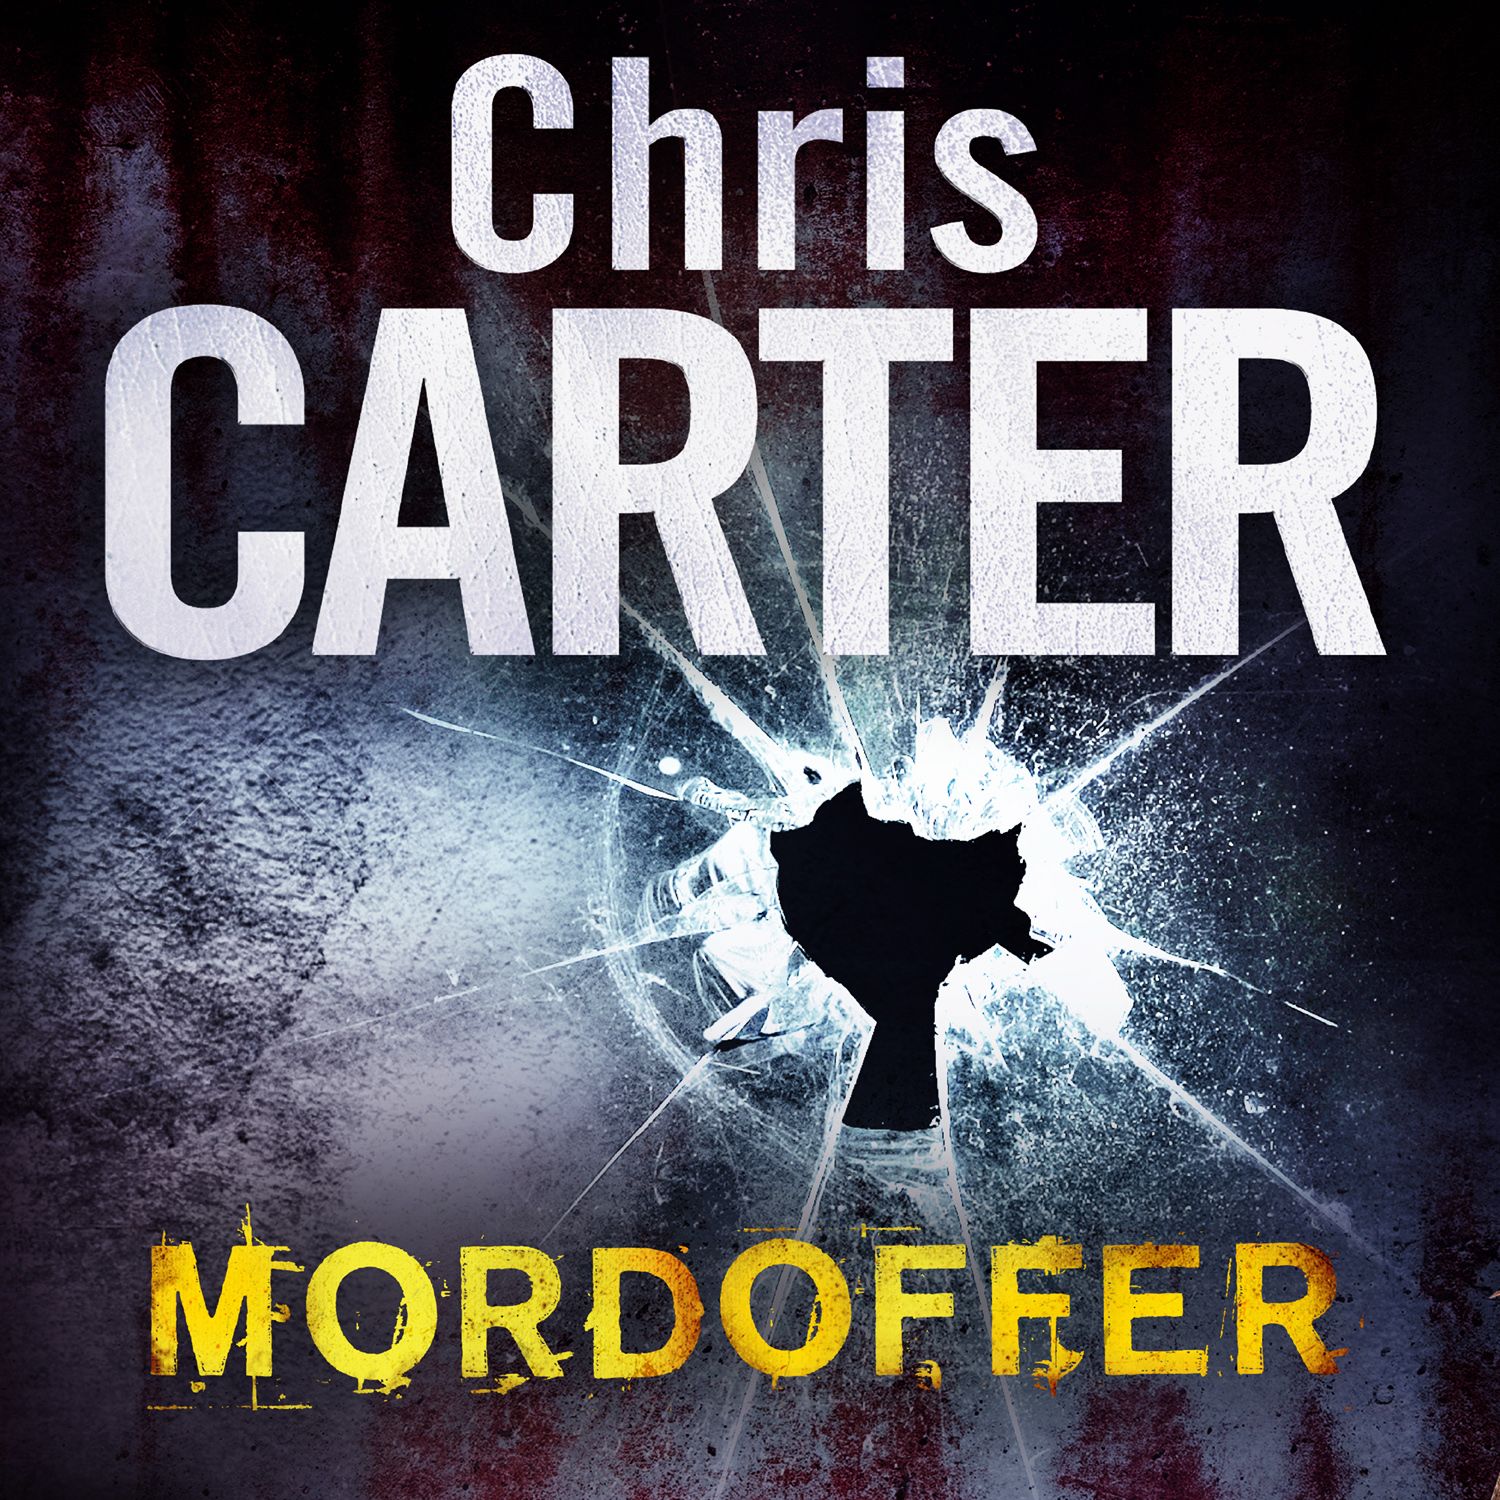 Mordoffer, ljudbok av Chris Carter